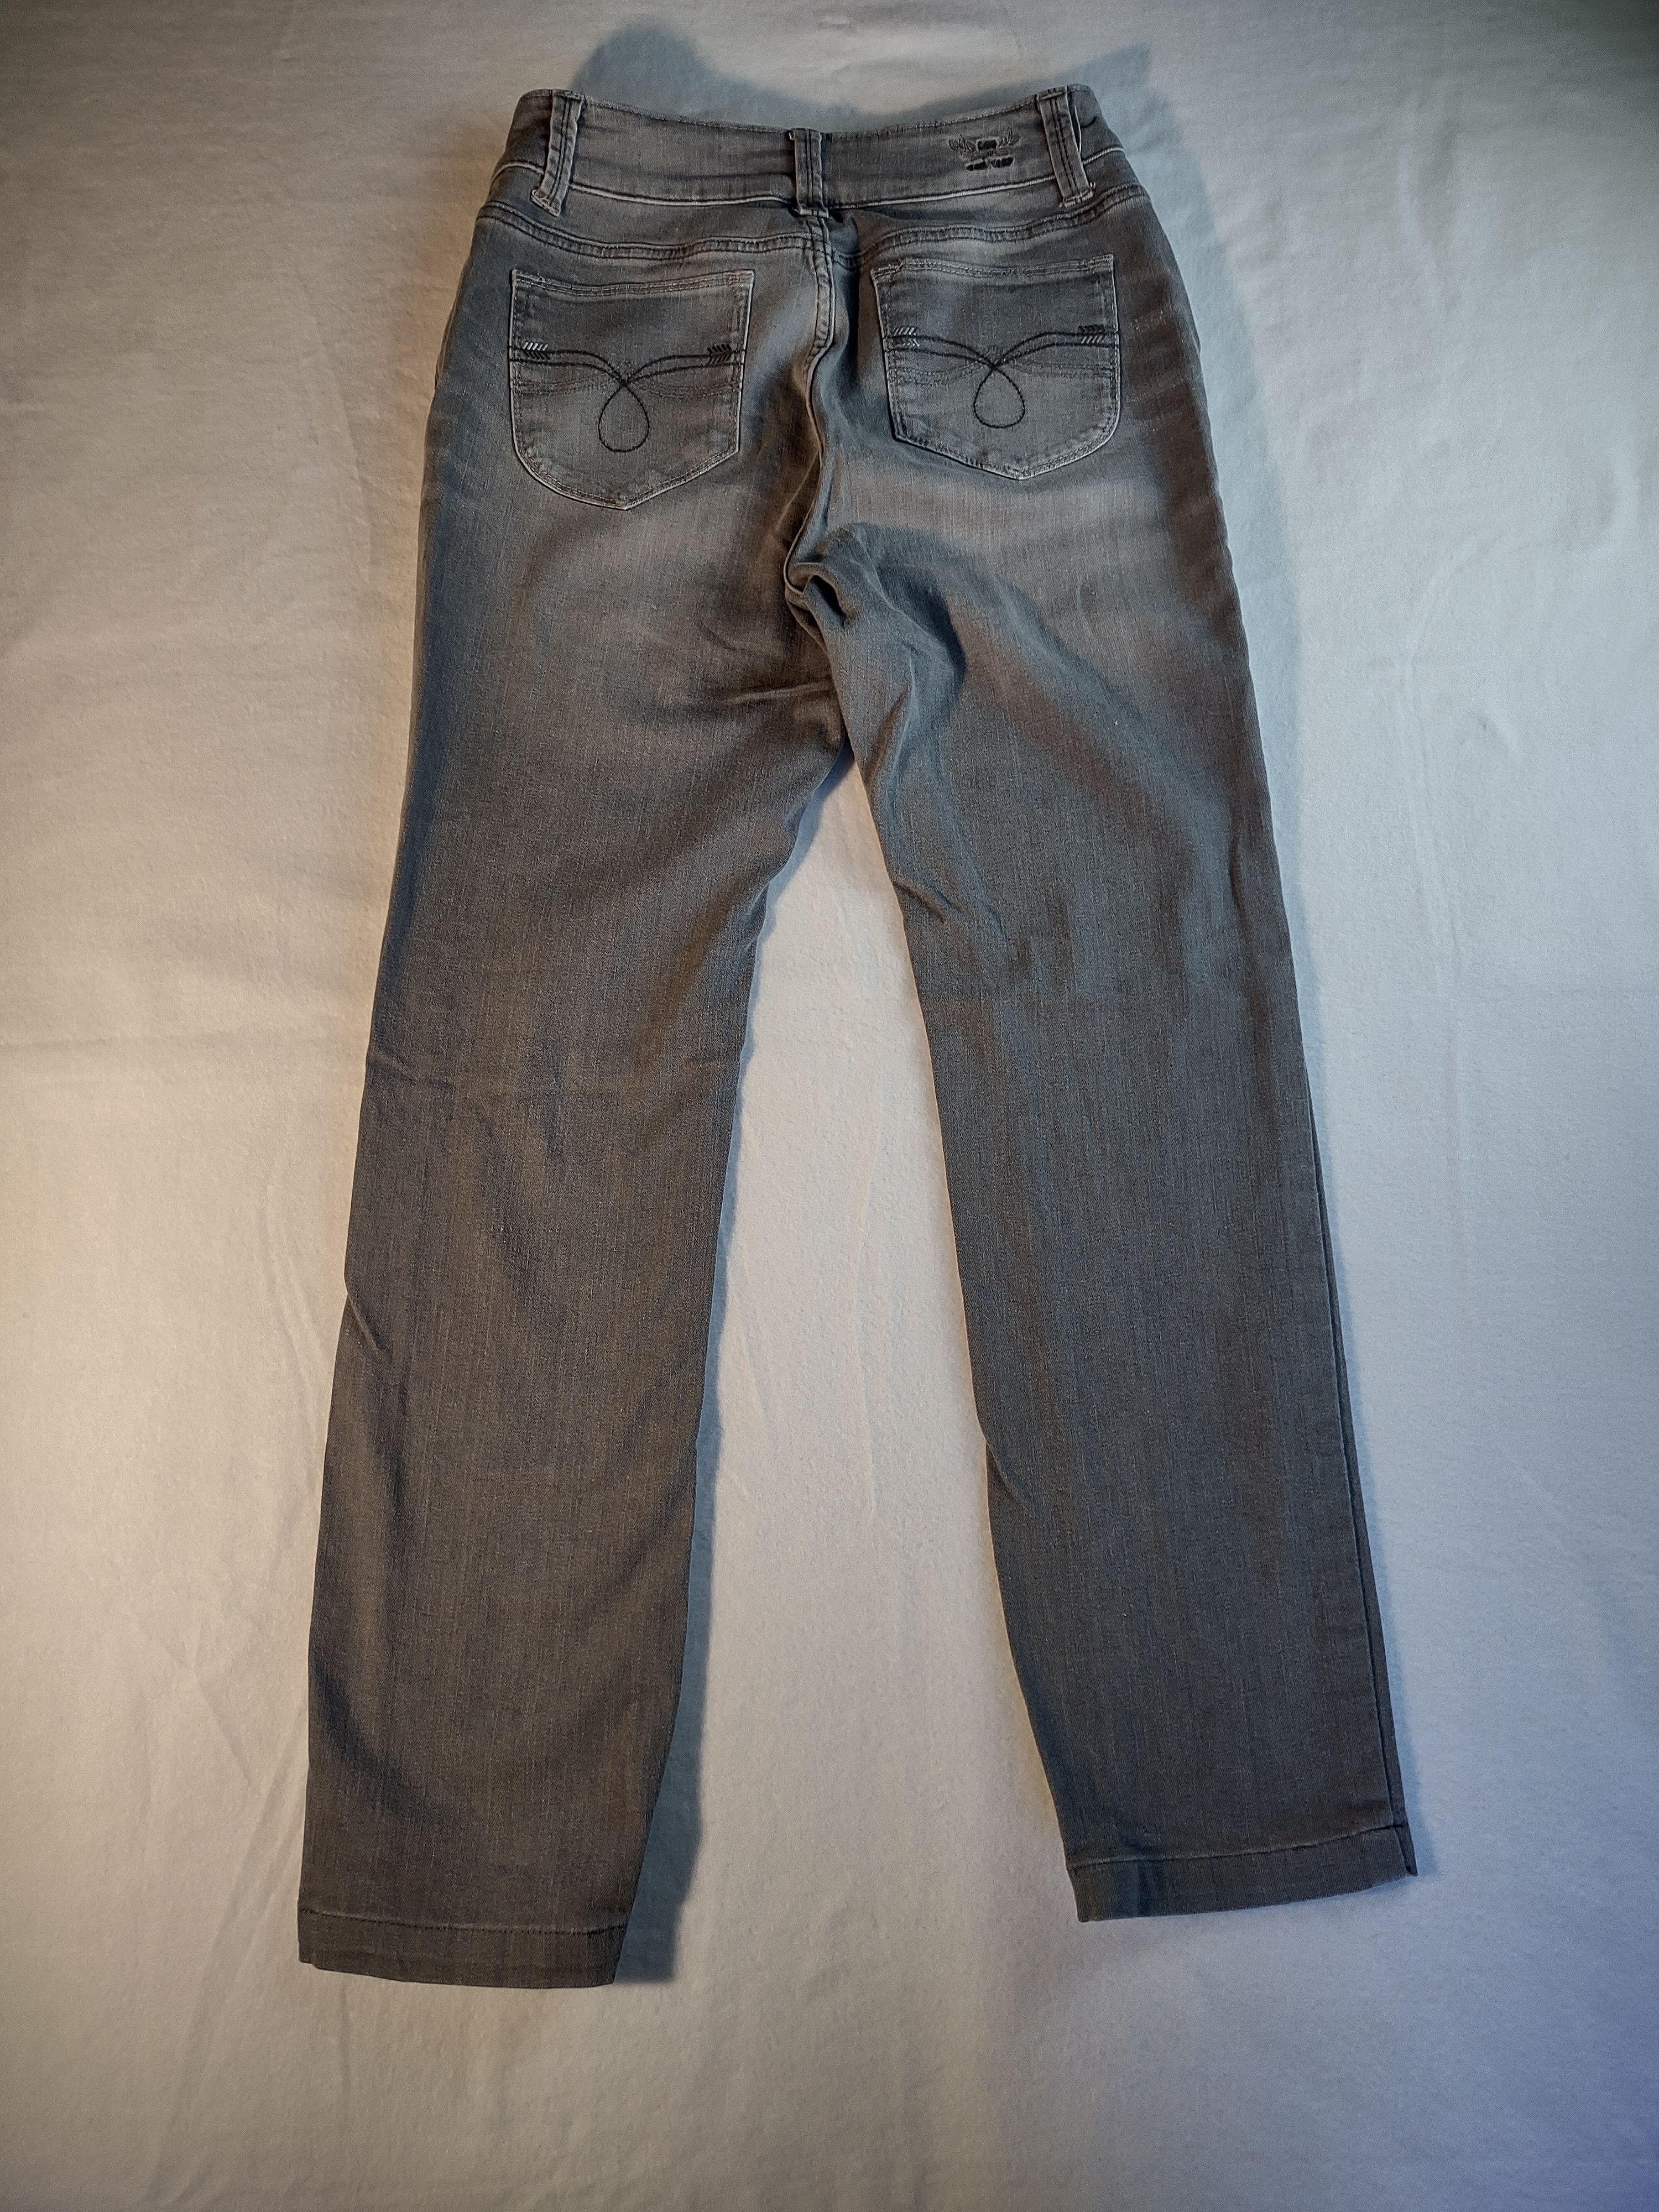 Lee Lee Perfect Fit Just Below Waist denim jeans gray ash wash Size 28" / US 6 / IT 42 - 3 Thumbnail